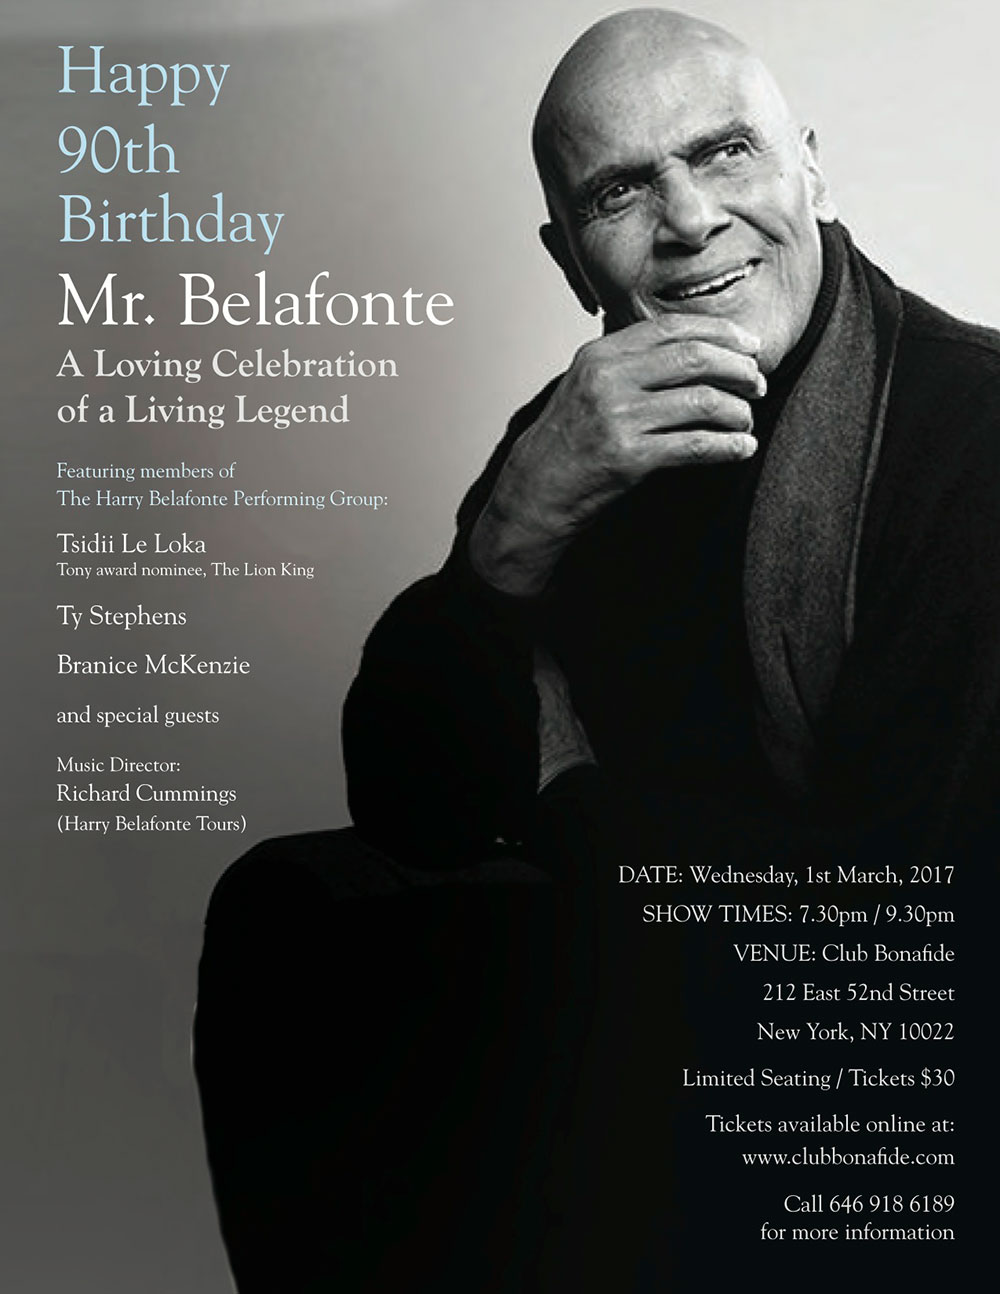 Happy 90th Birthday Mr. Belafonte